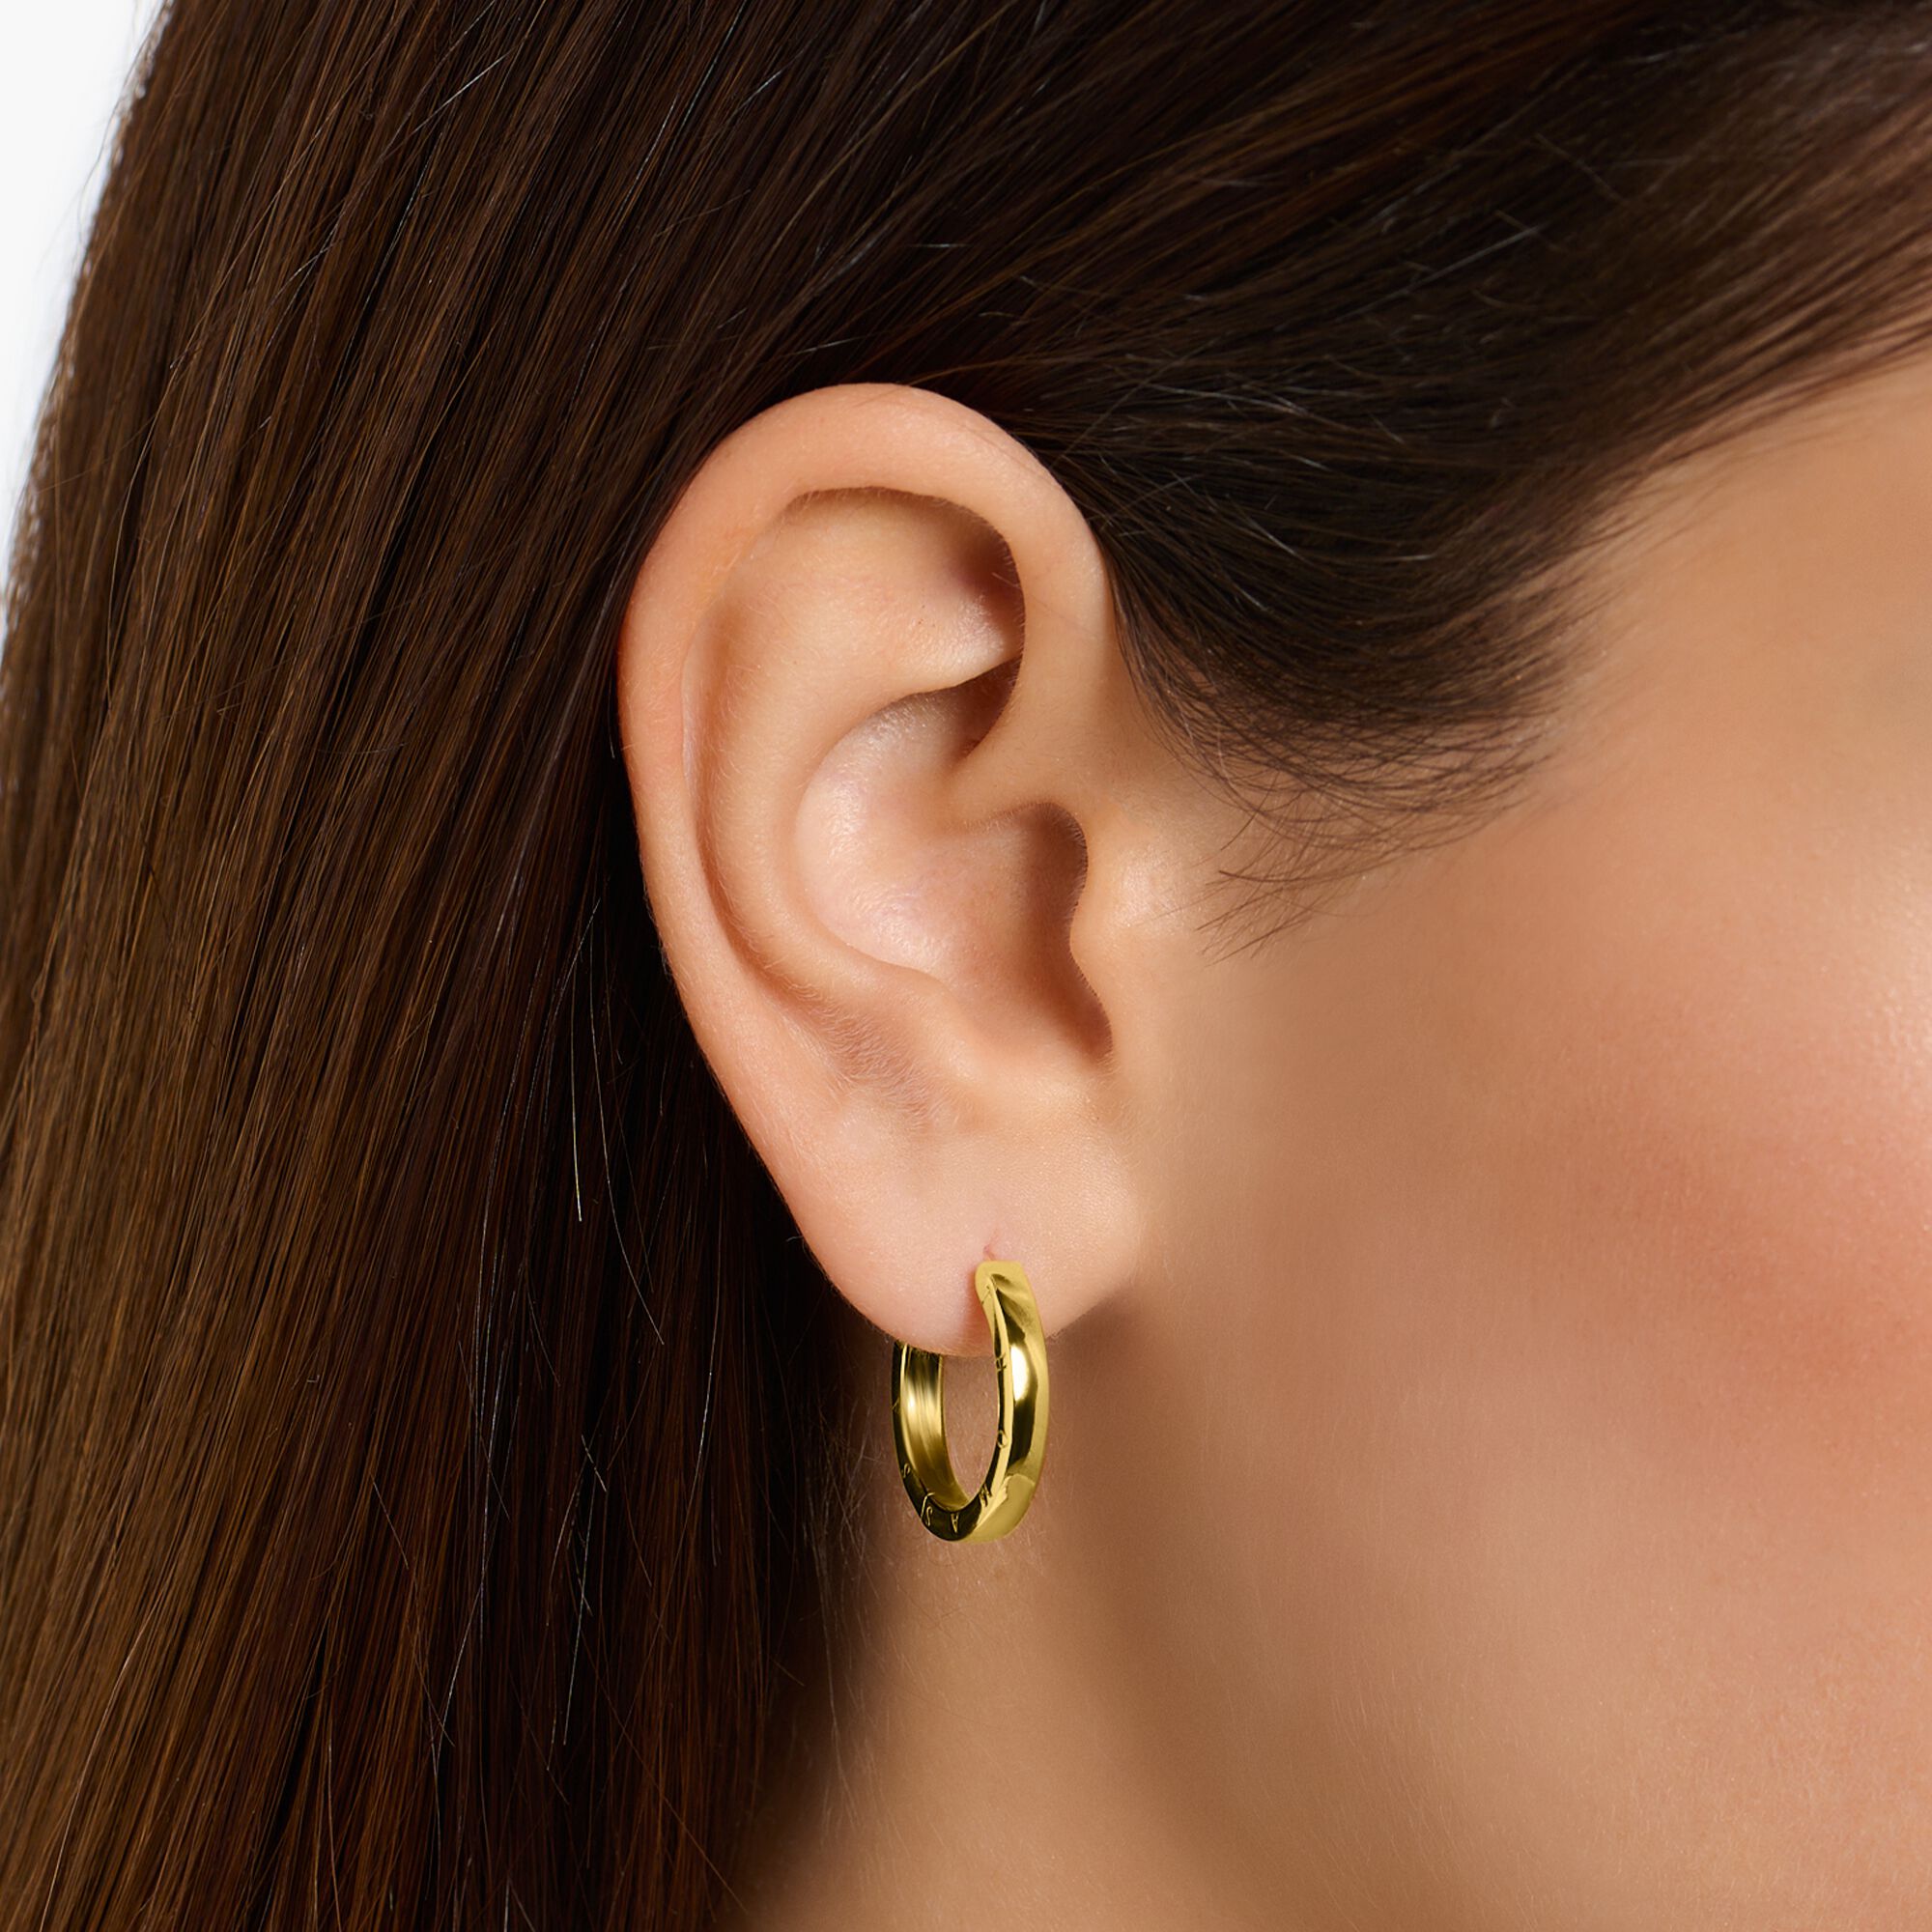 Verenigde Staten van Amerika motto Verplicht Hoop earrings, silver with yellow gold plating – THOMAS SABO